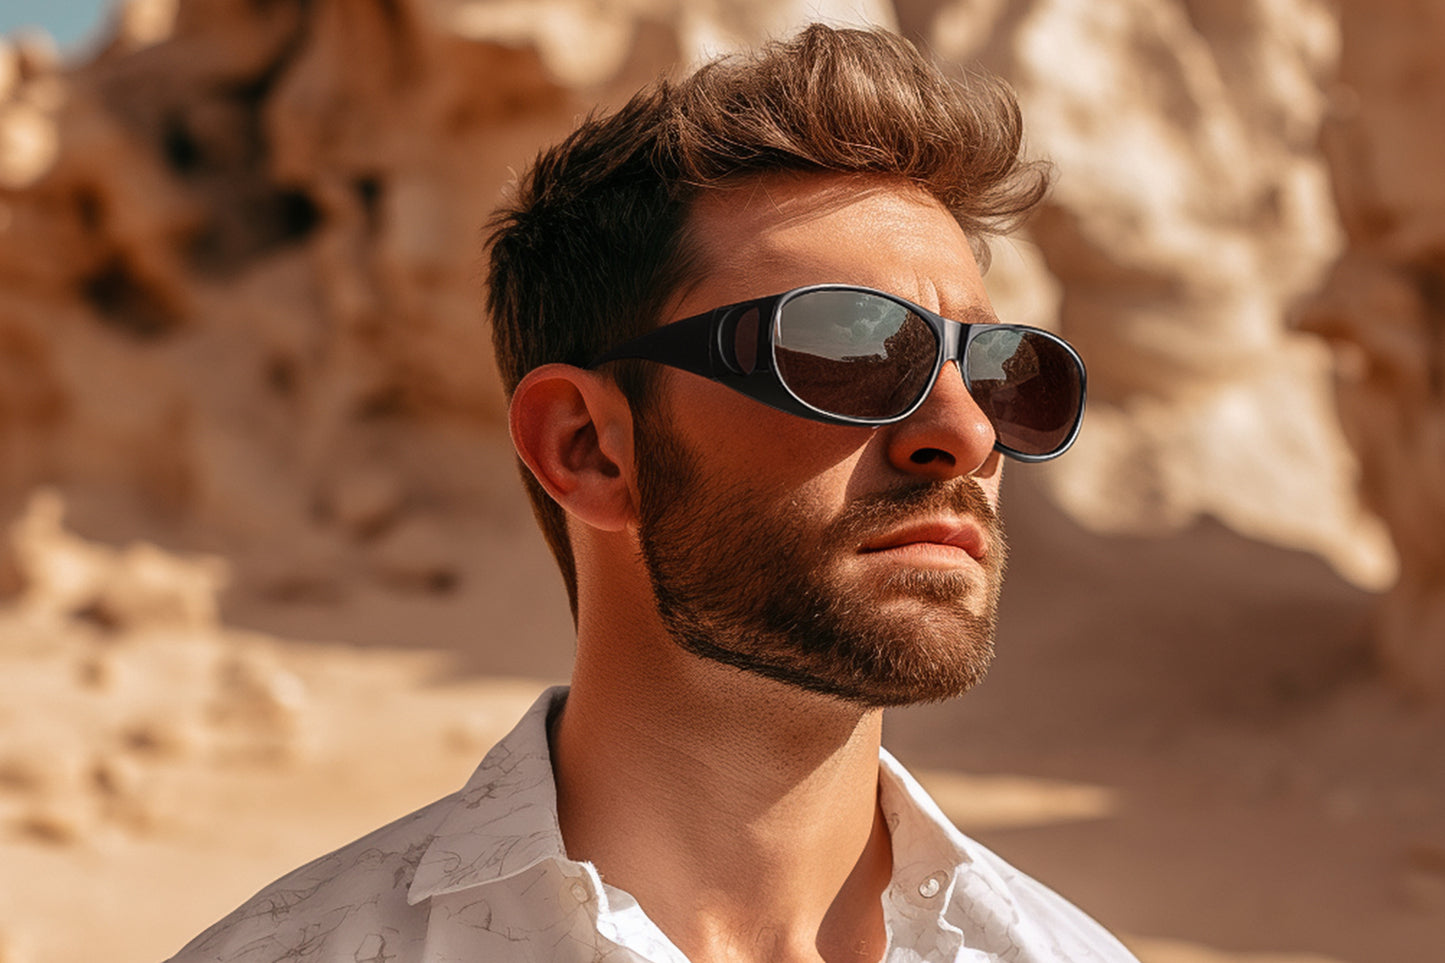 Fit Over Wrap Sunglasses Polarized Wear Over Eyeglasses丨Side Lens 2502